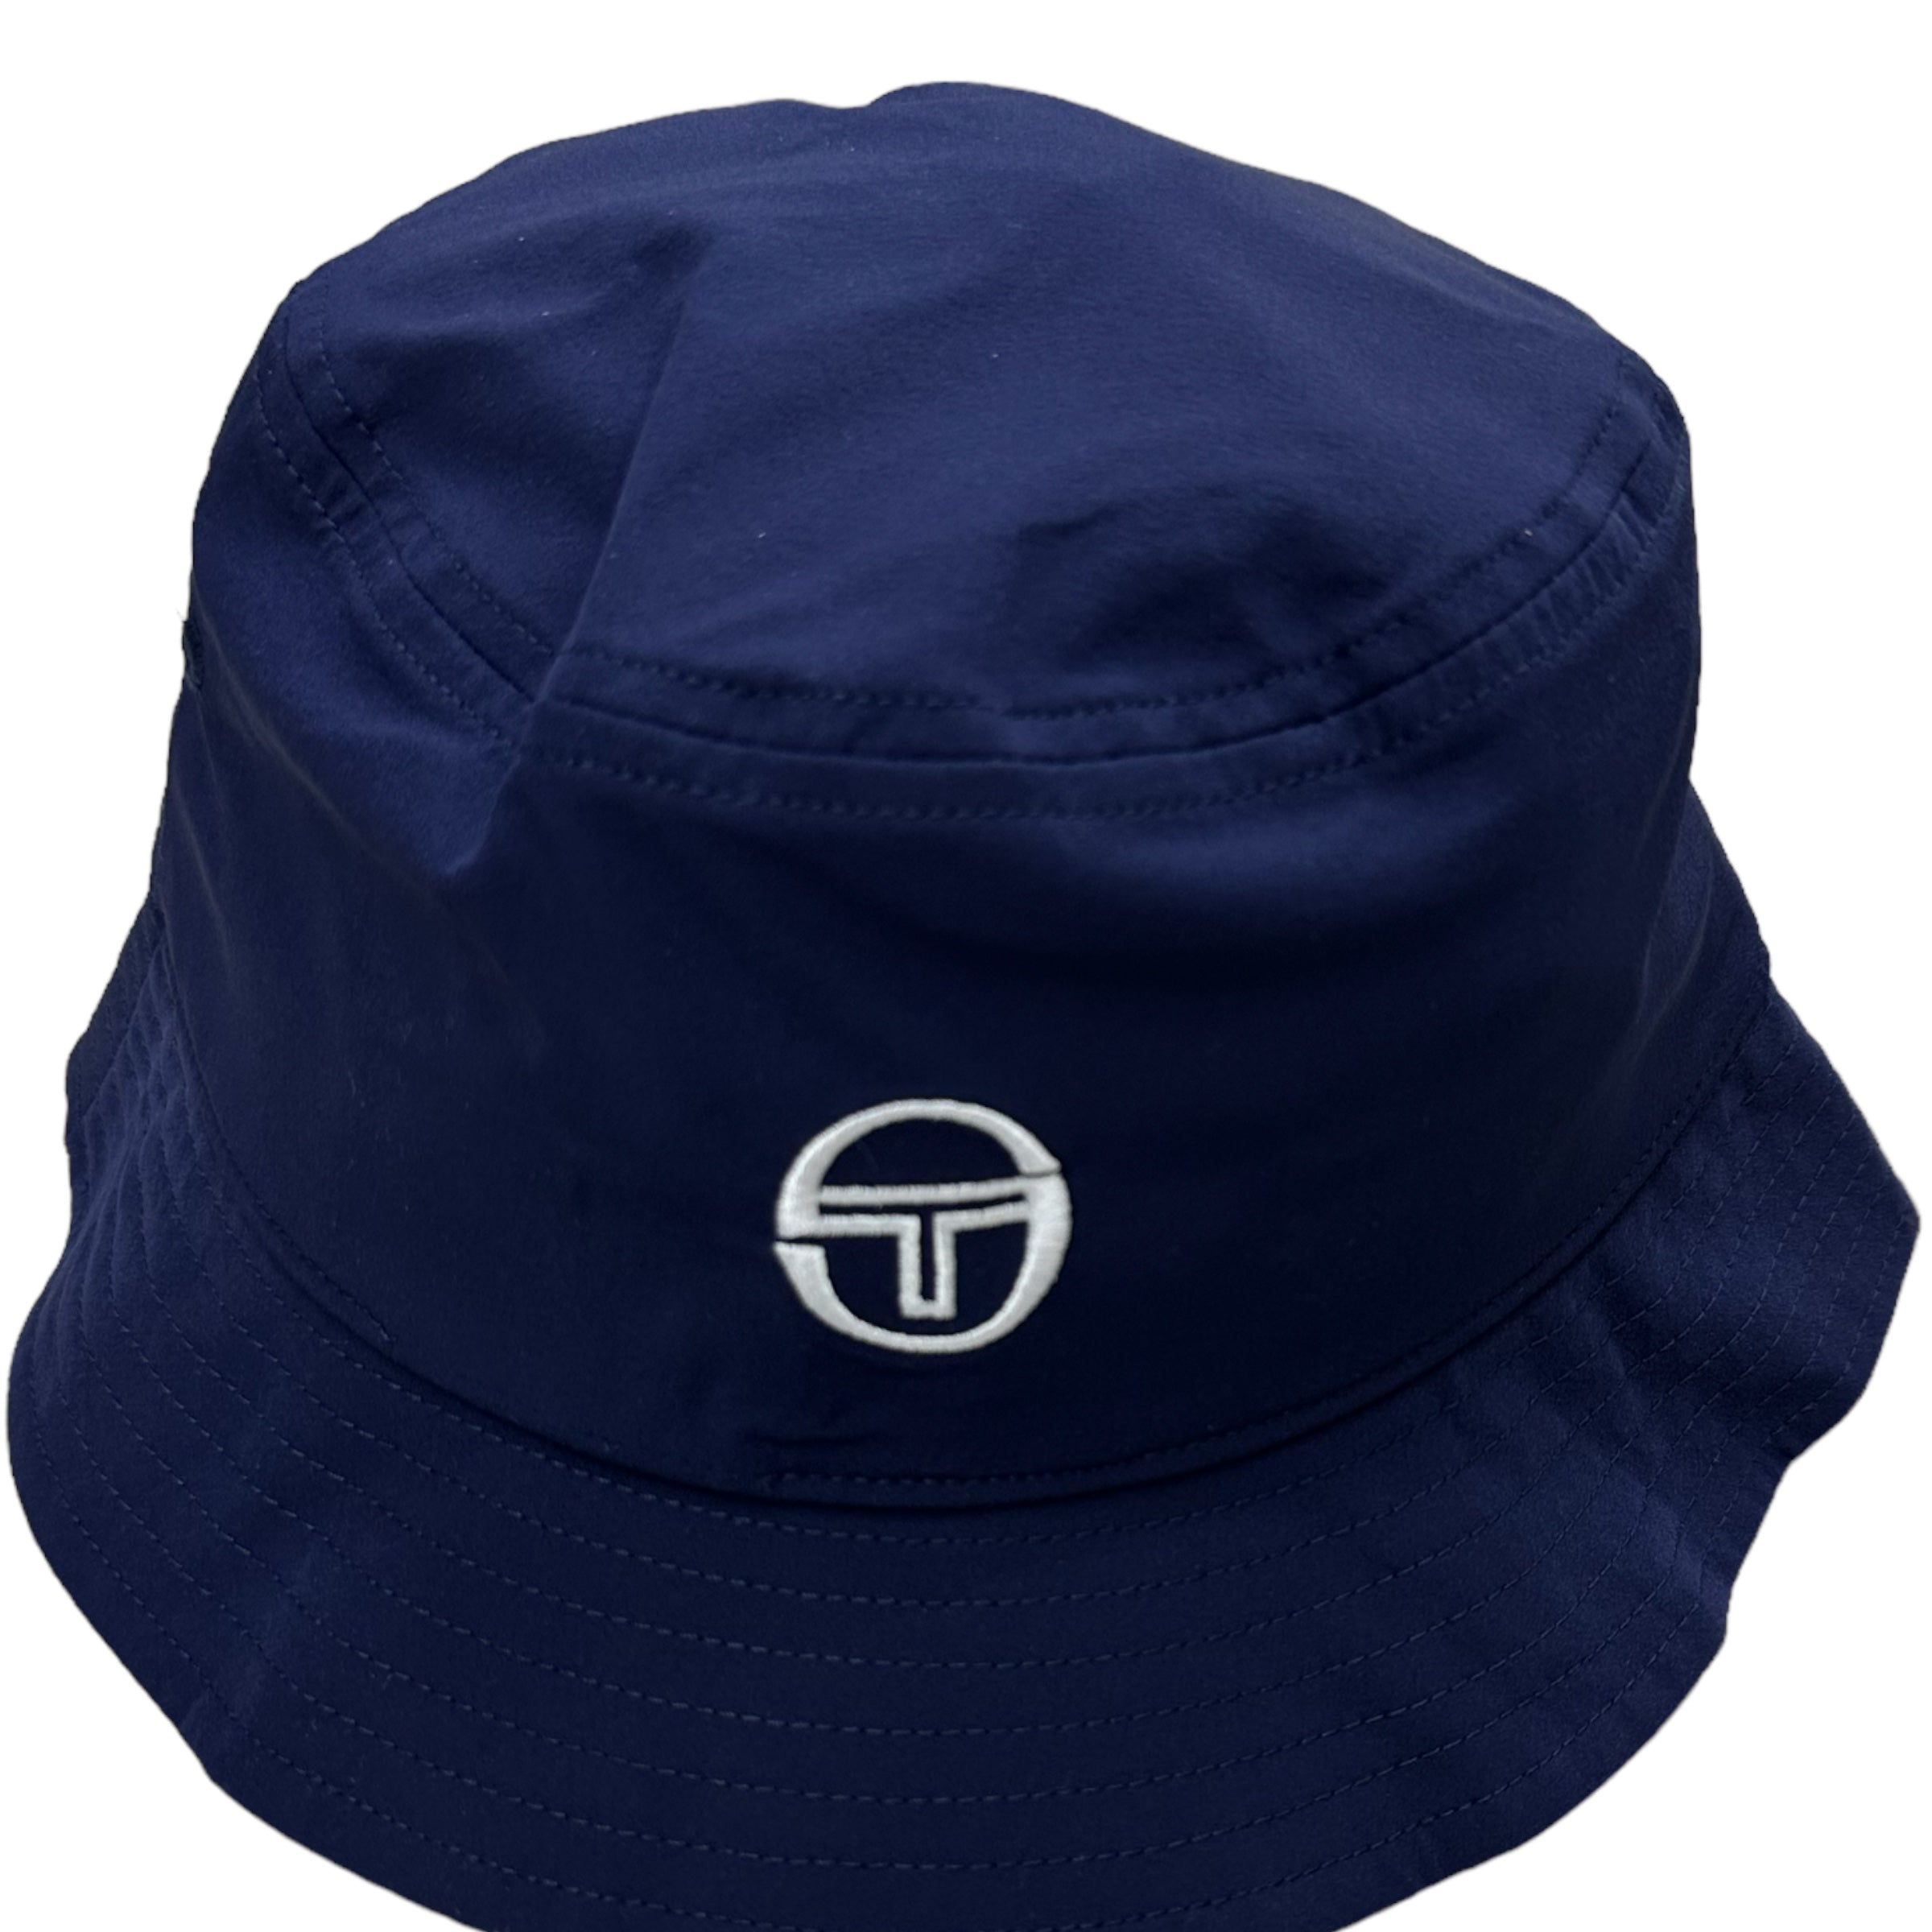 Sergio Tacchini Bucket Hat Navy